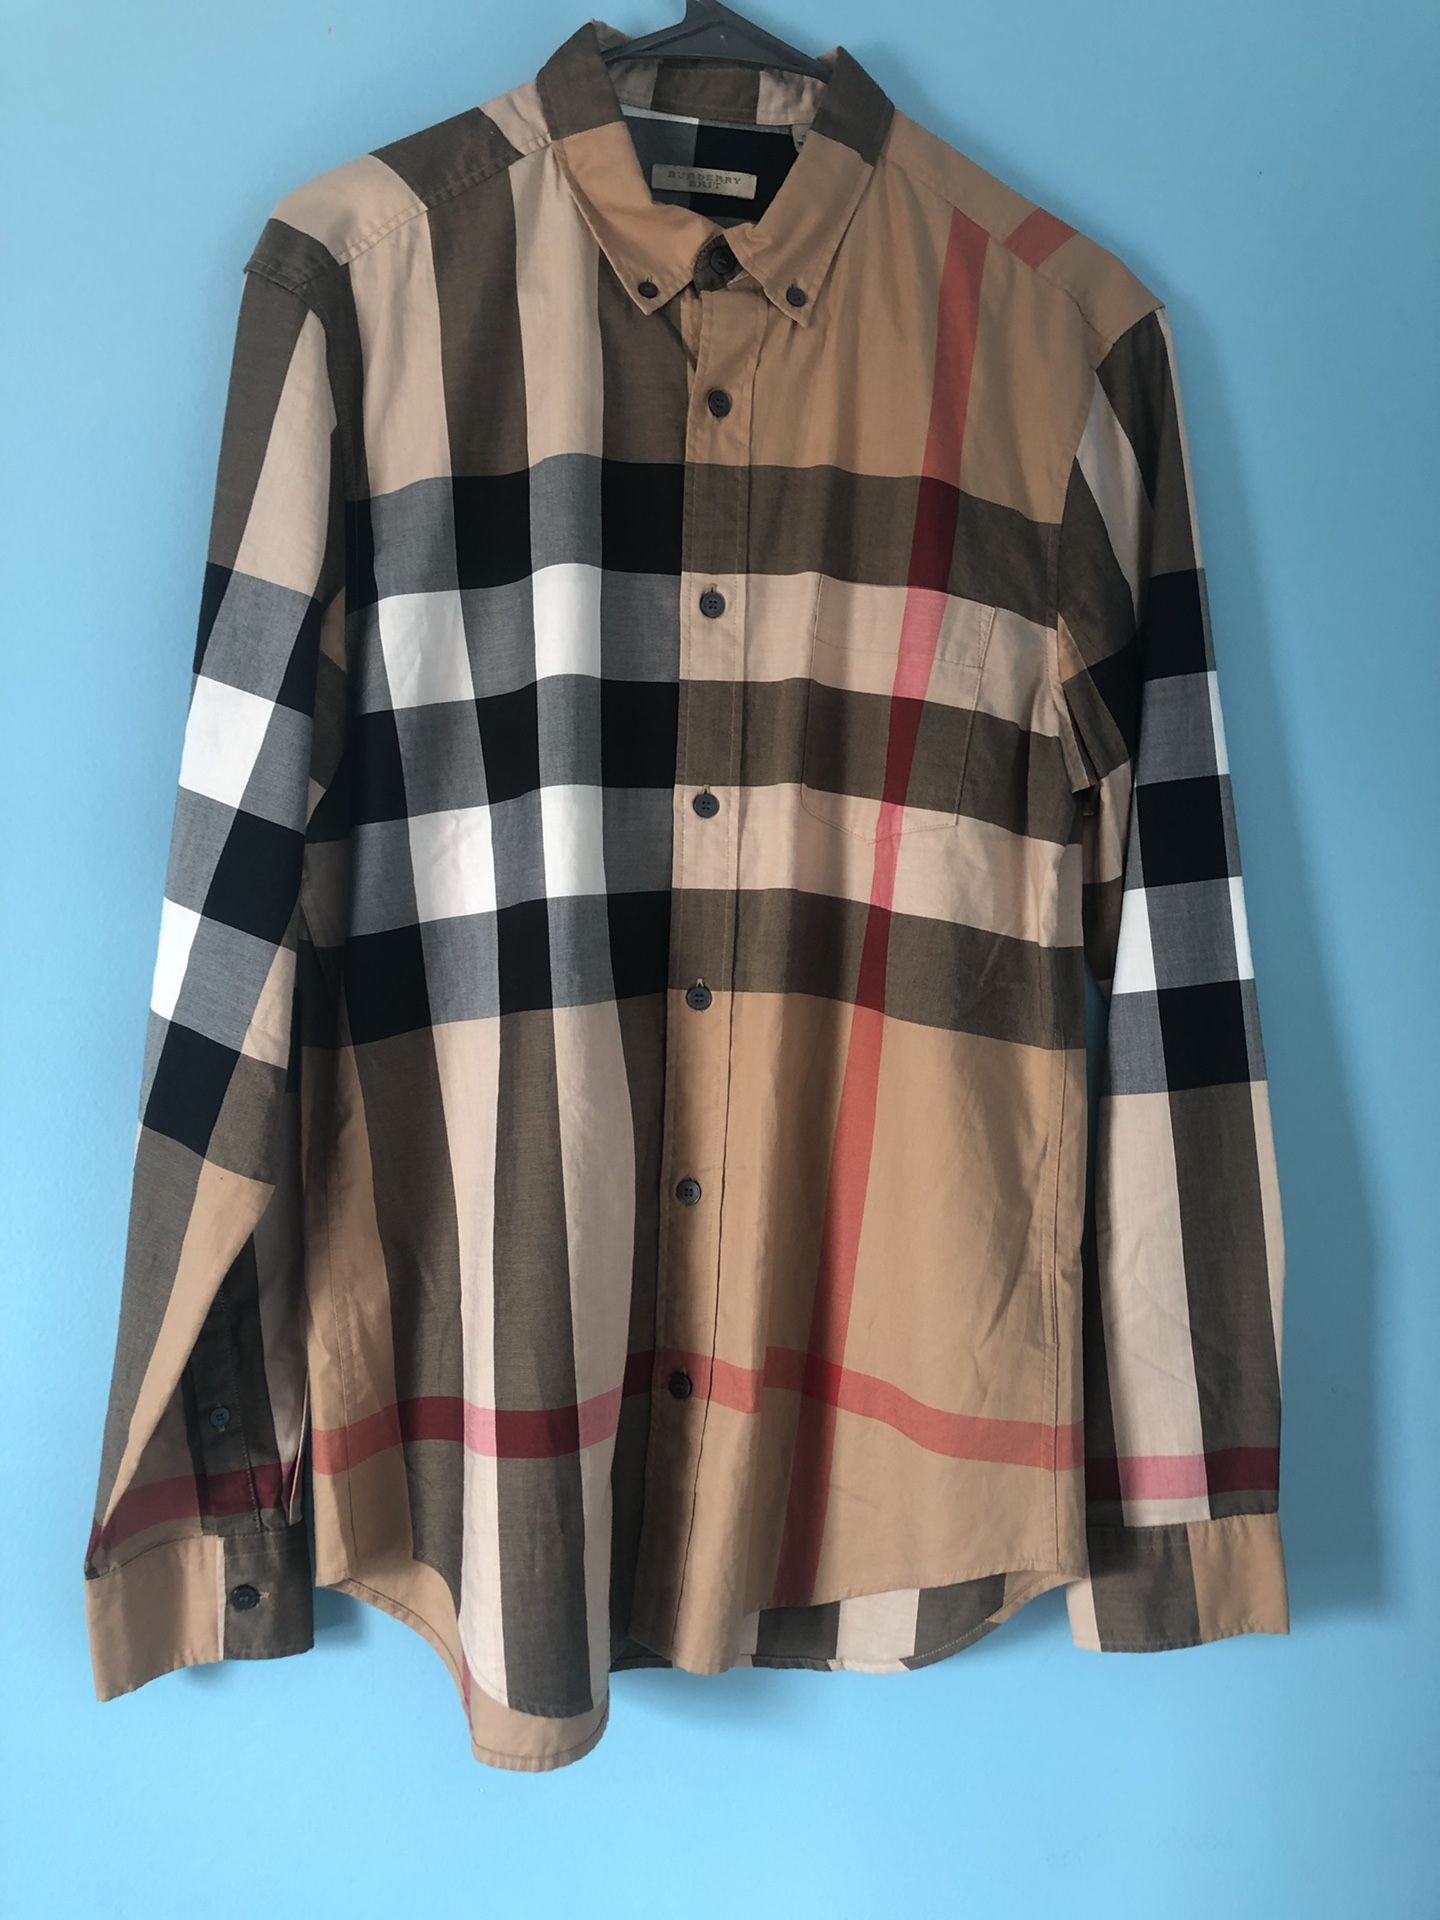 Burberry Check Cotton Flannel Shirt (Size Medium)